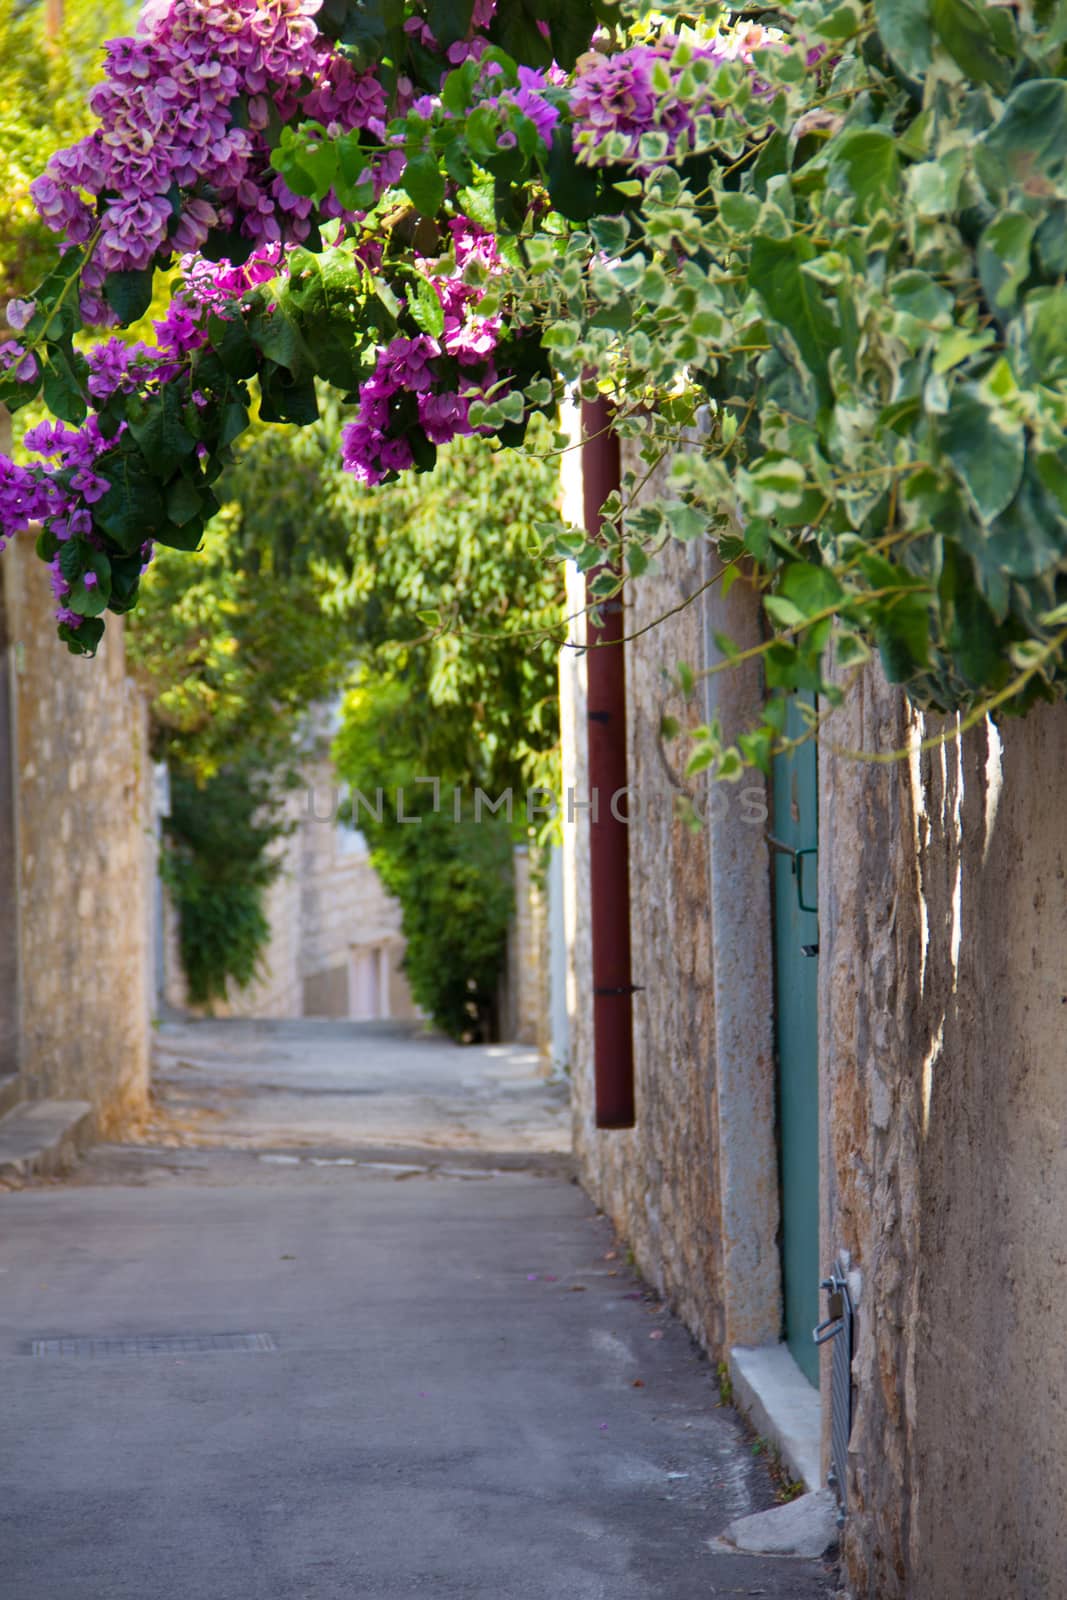 Old street with flowers in Supetar town in Brac island, Croatia.